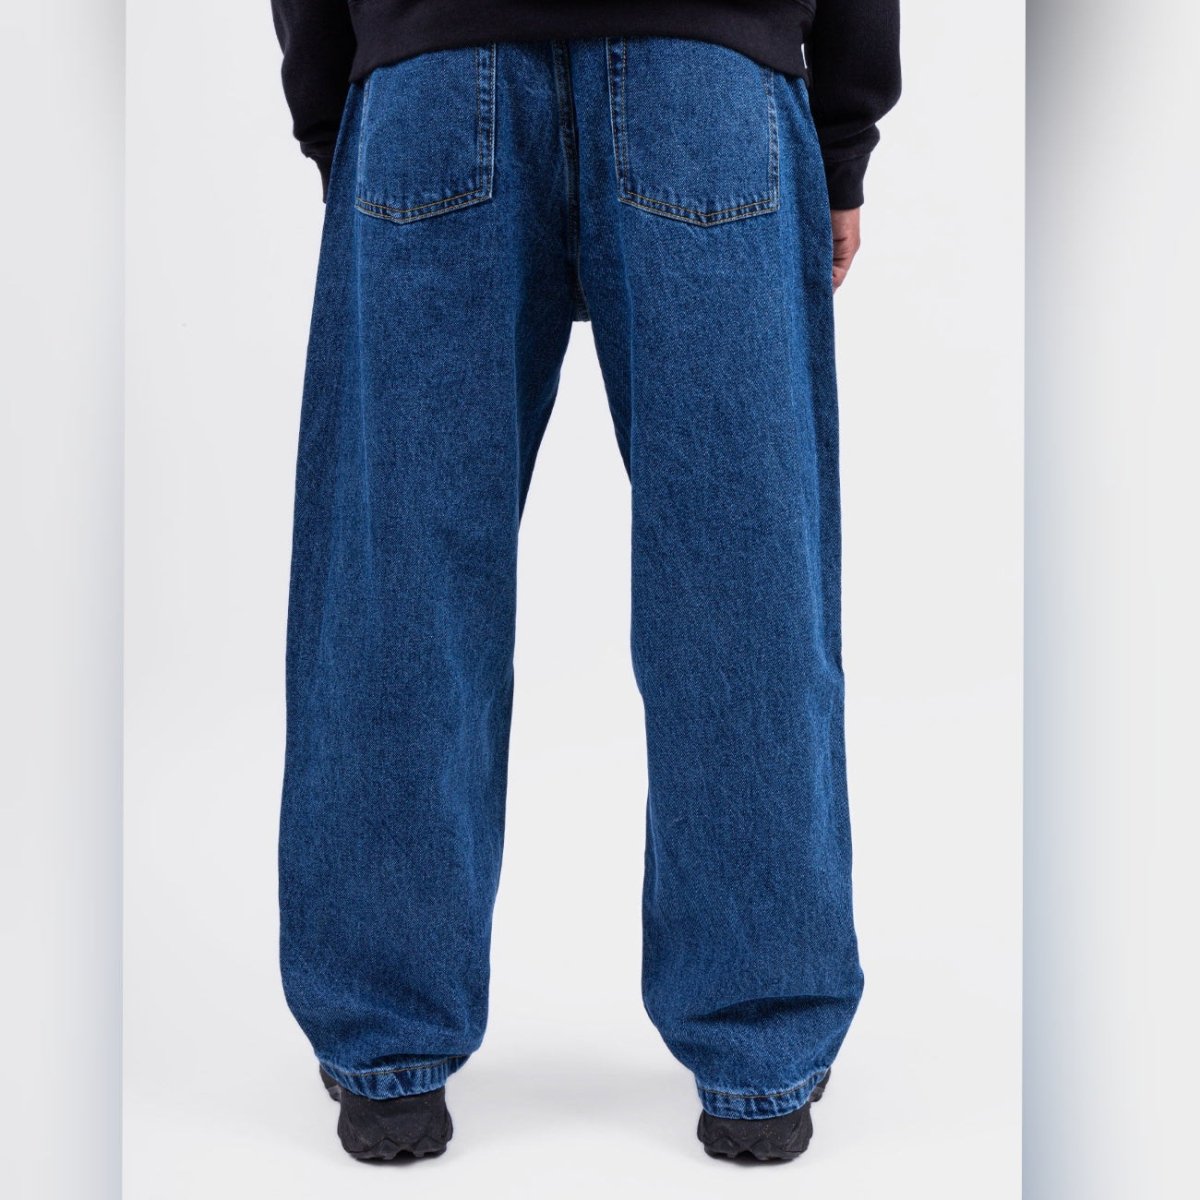 ÜBER Denim Baggy Pant stone blue - Jeans - Rollbrett Mission